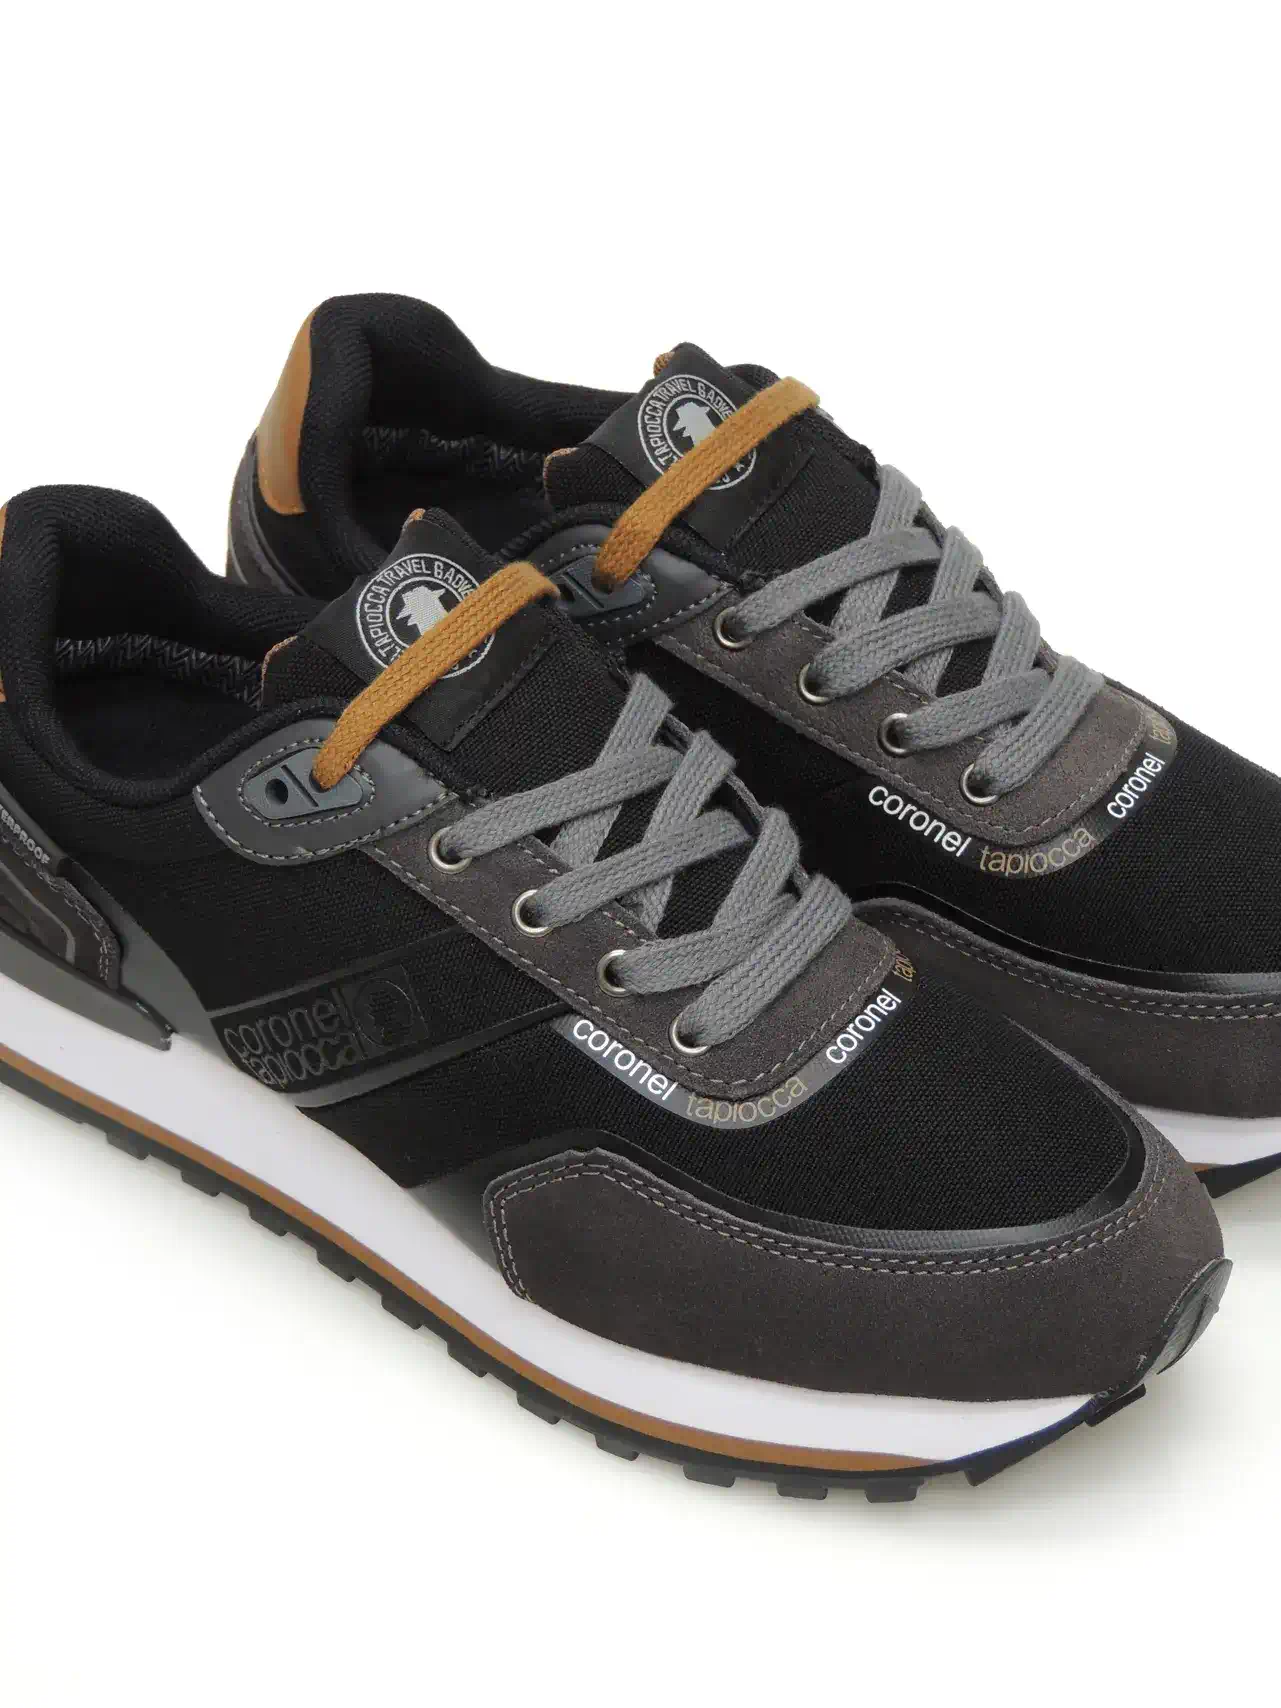 sneakers--coronel tapiocca-t500-1-piel-negro